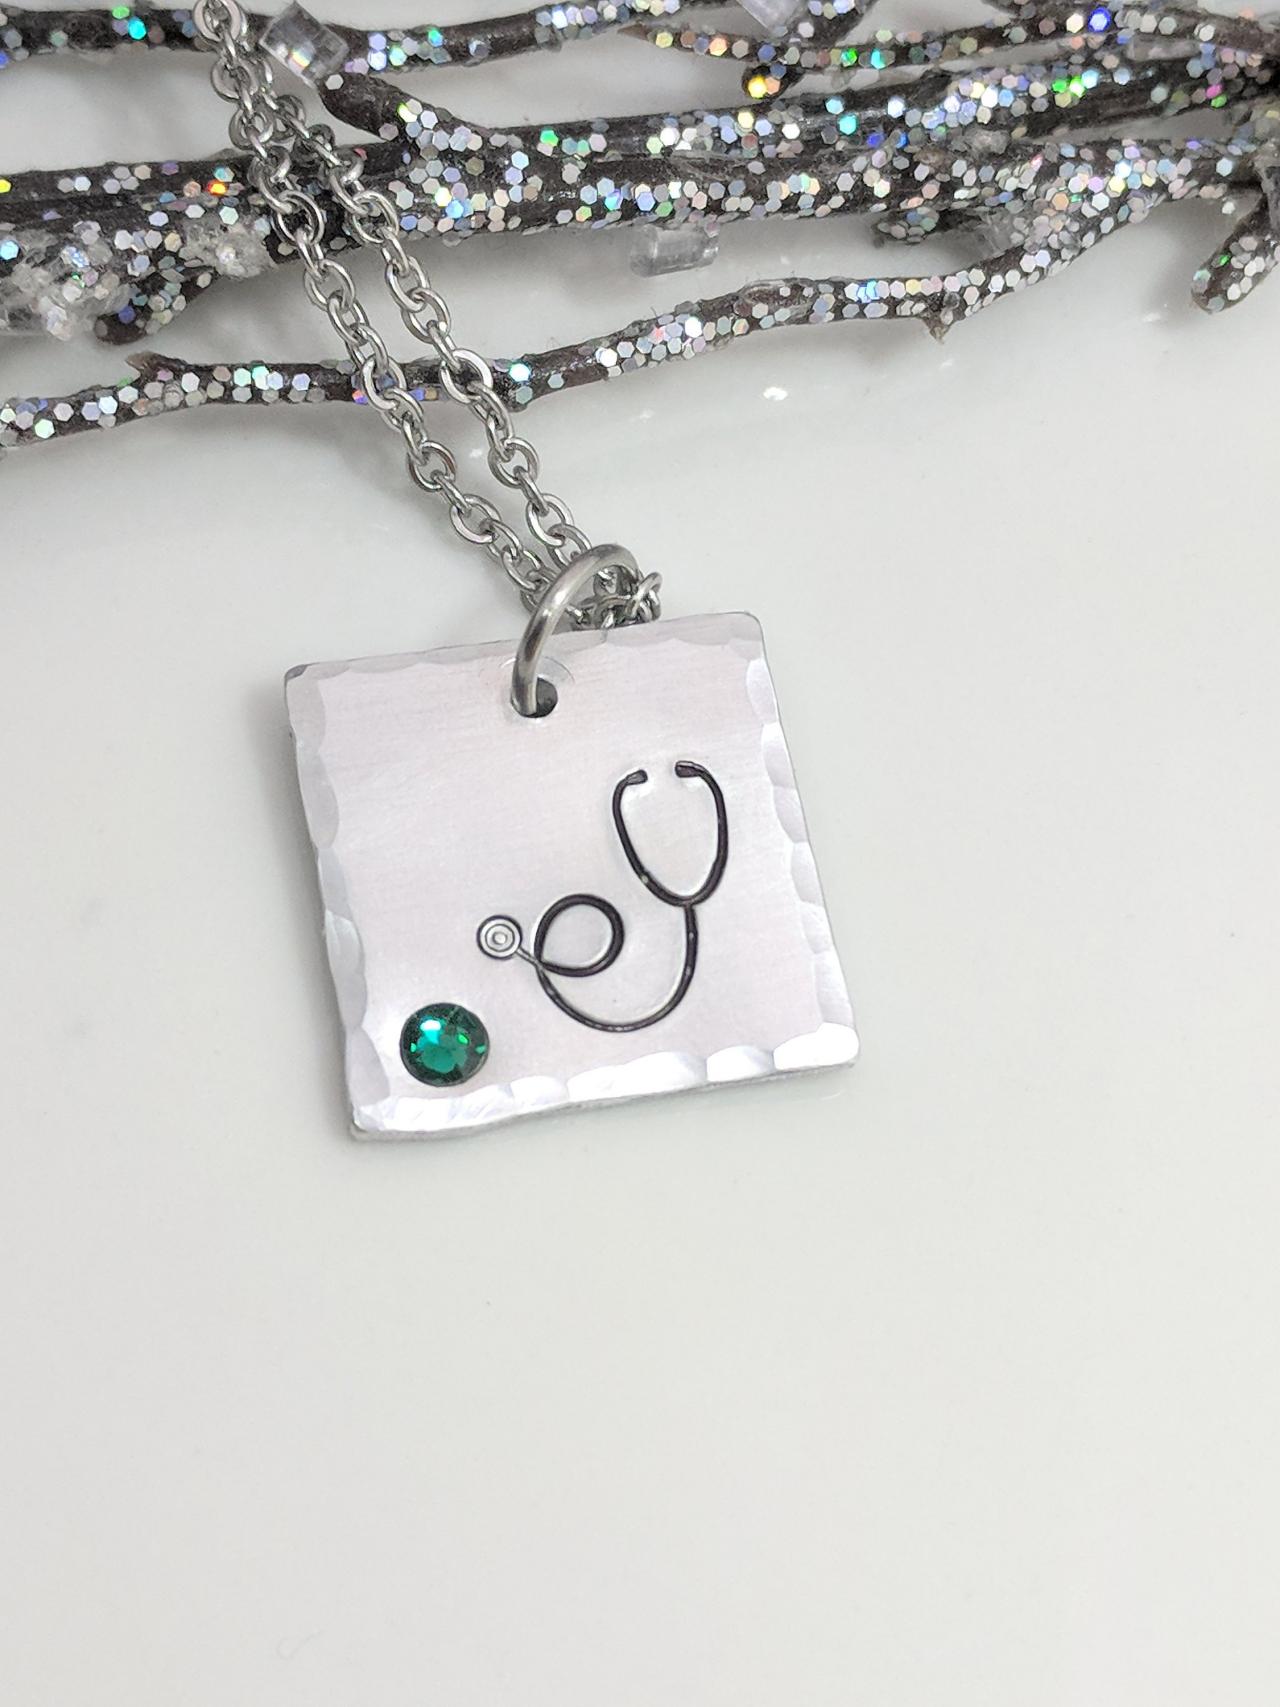 Hand Stamped Necklace Nurse Jewelry - Rn Gift - Stethoscope Necklace - Birthstone Jewelry - Cna - Nurse Graduation - Nursing School - Doctor Gift